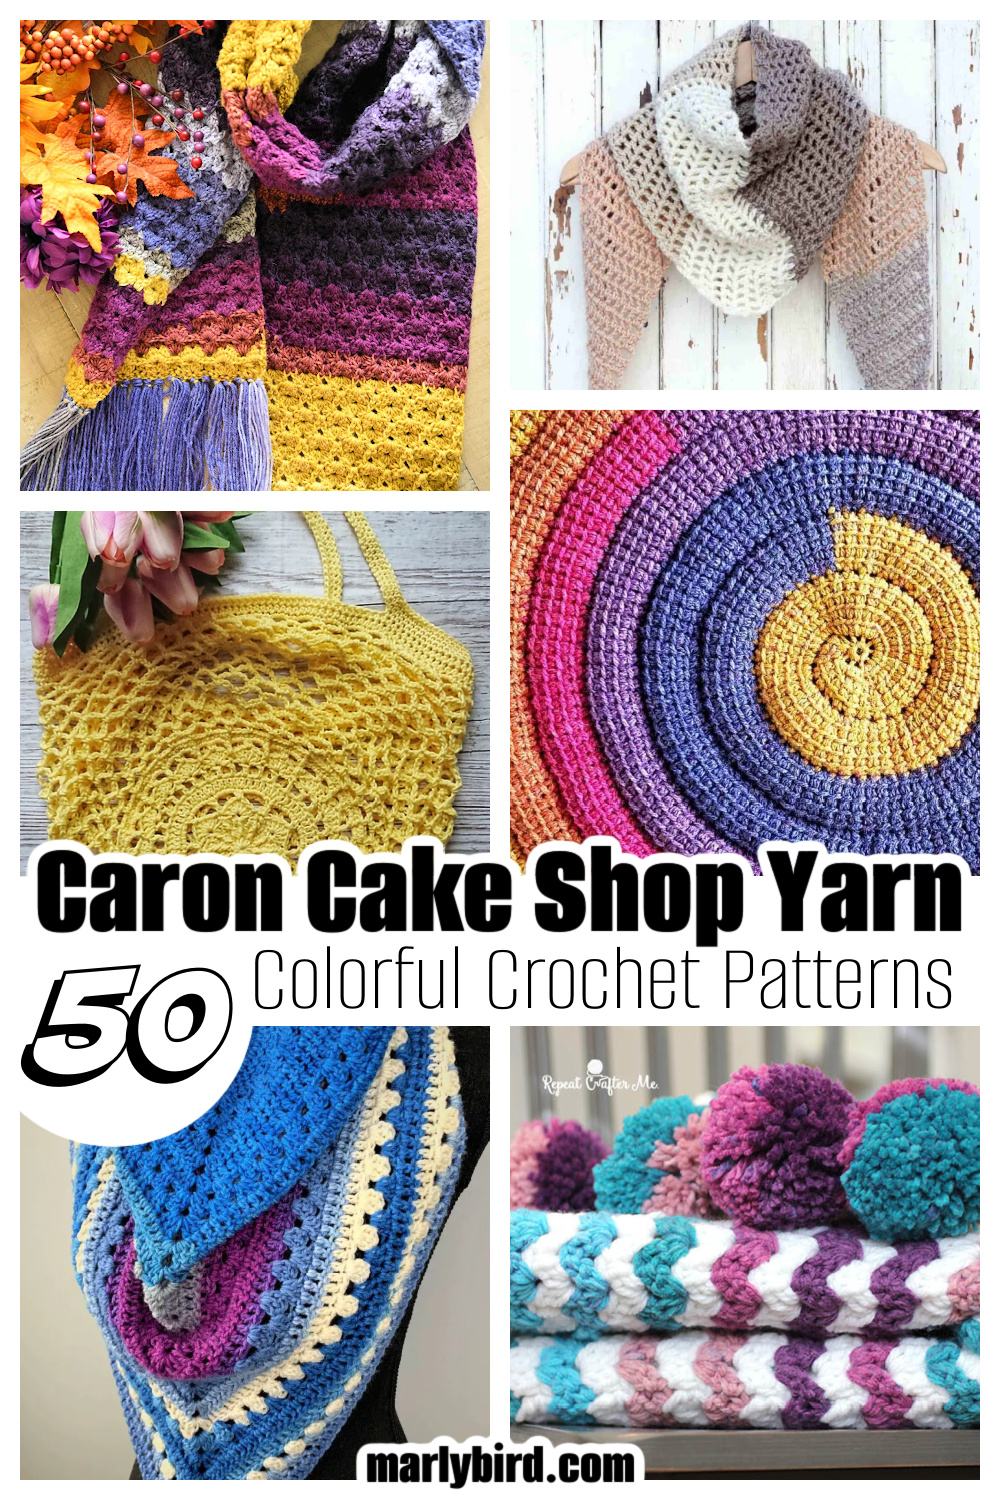 The Lunar Cardigan // Crochet Pattern // Bell Sleeve // Crochet Moon Graphic  // Crochet Cardigan 